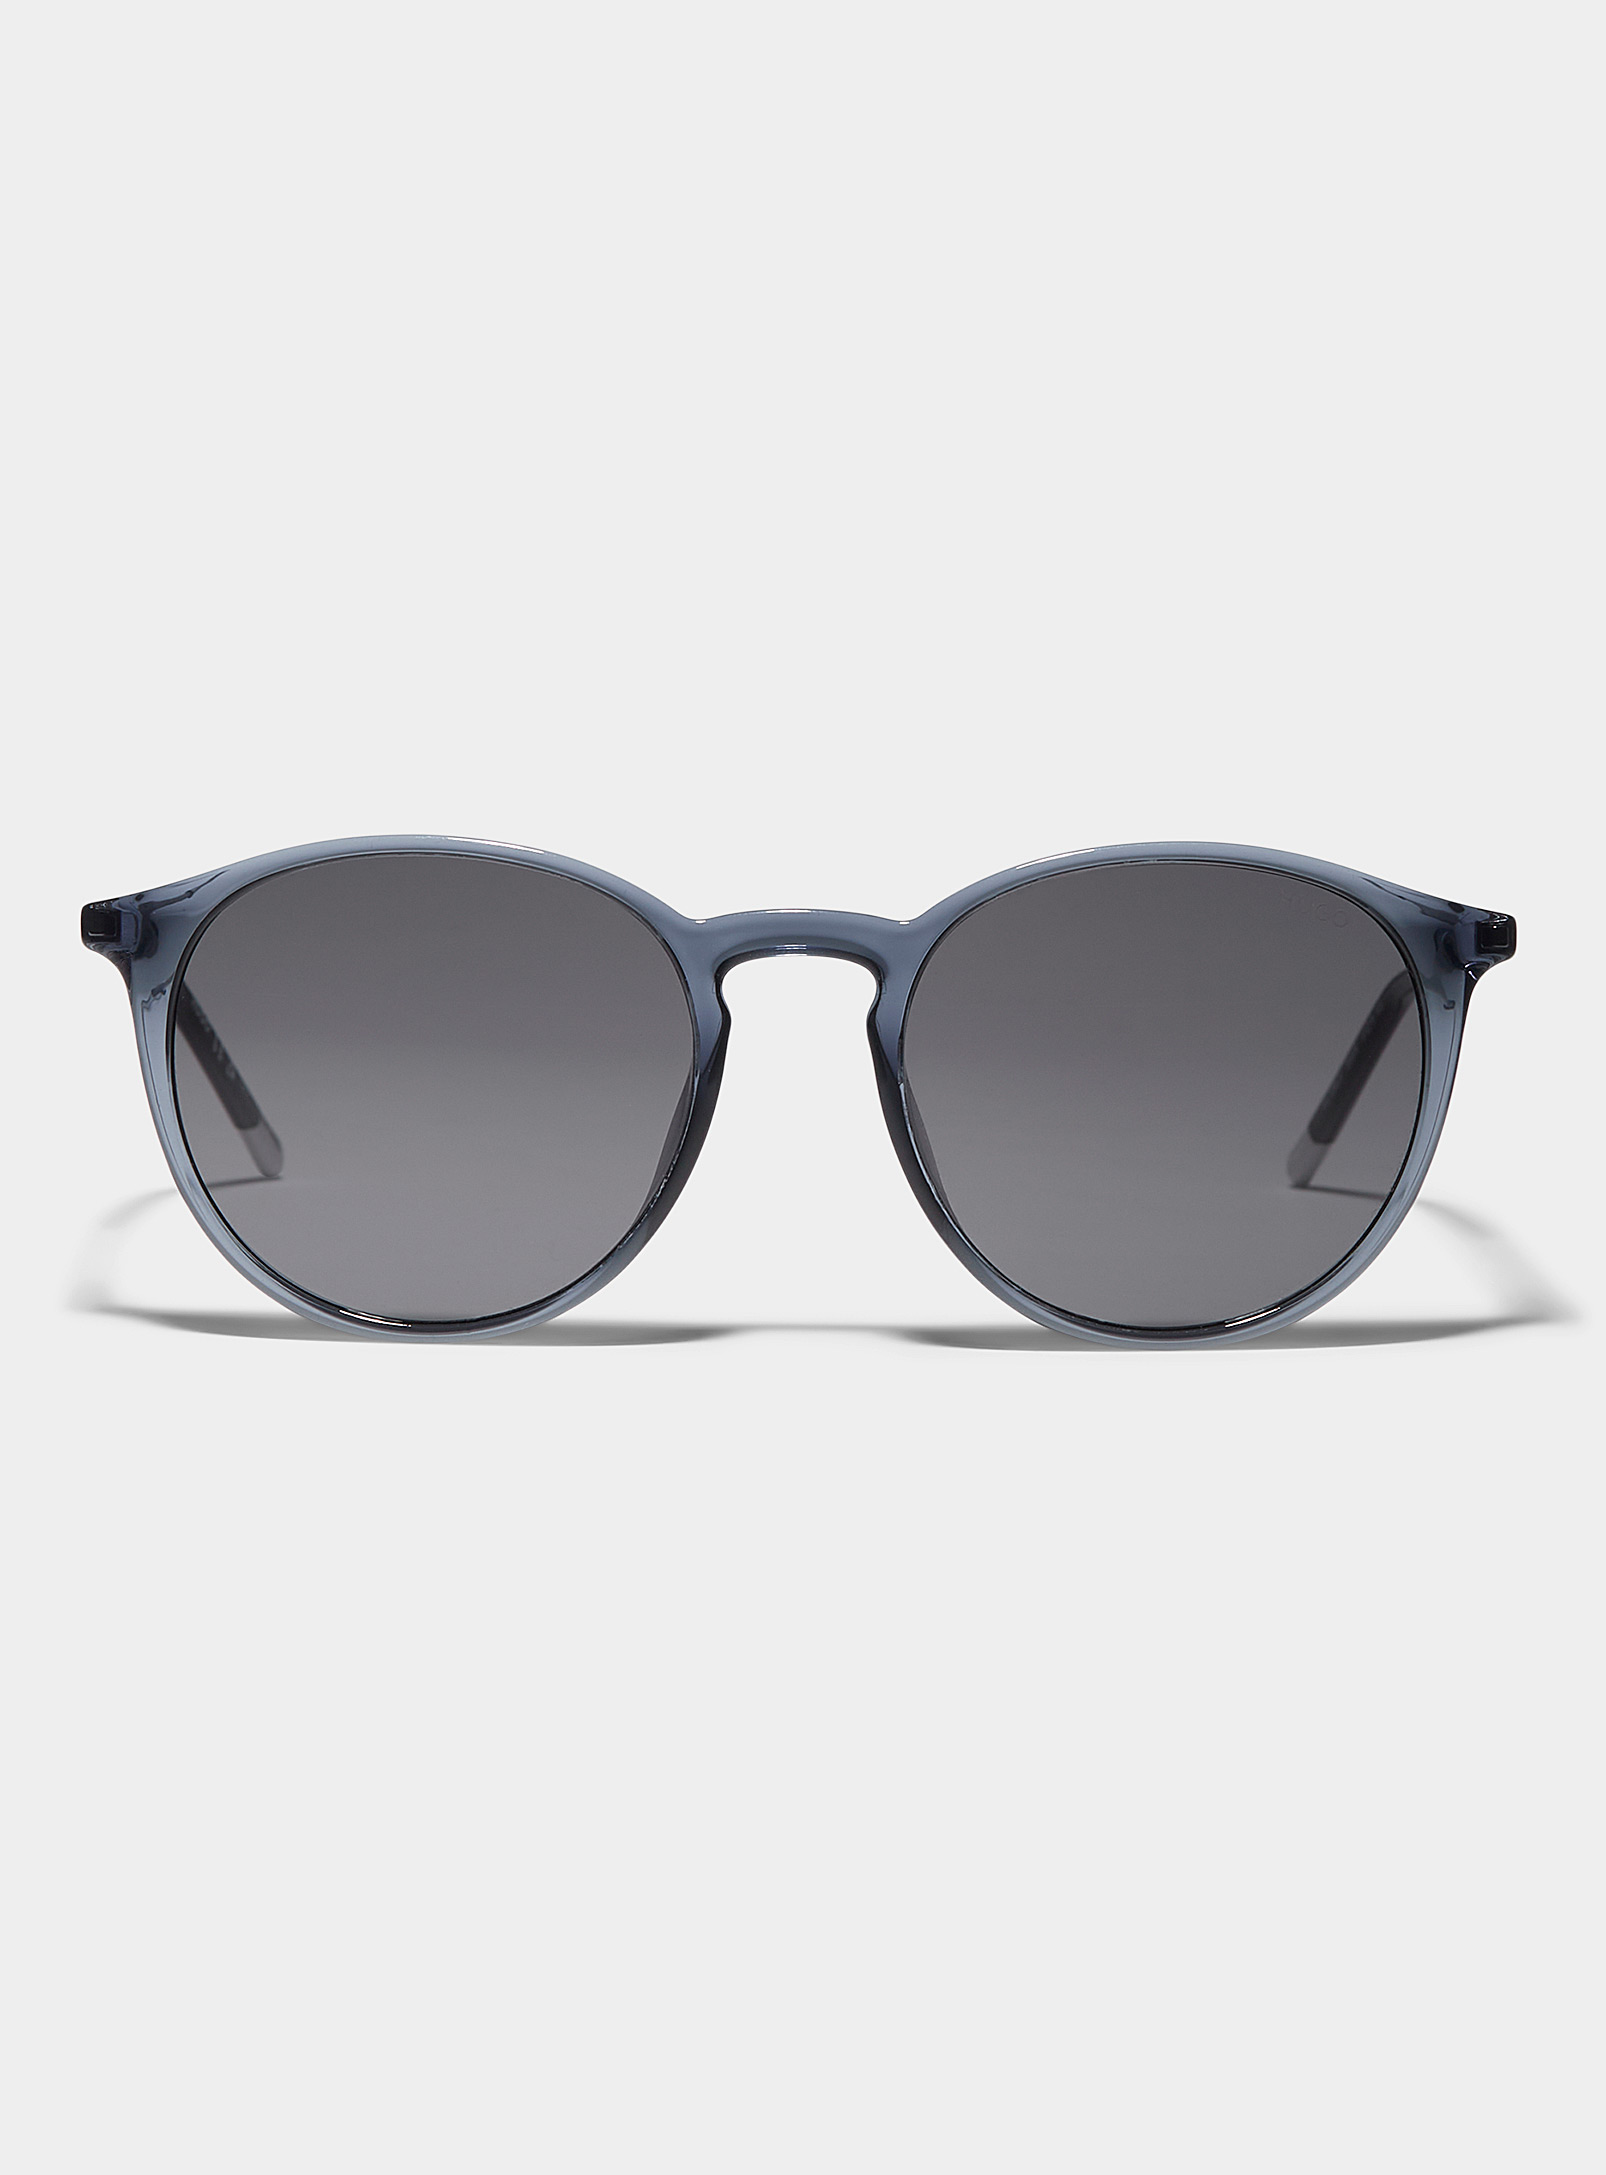 HUGO - Men's Blue-grey round sunglasses